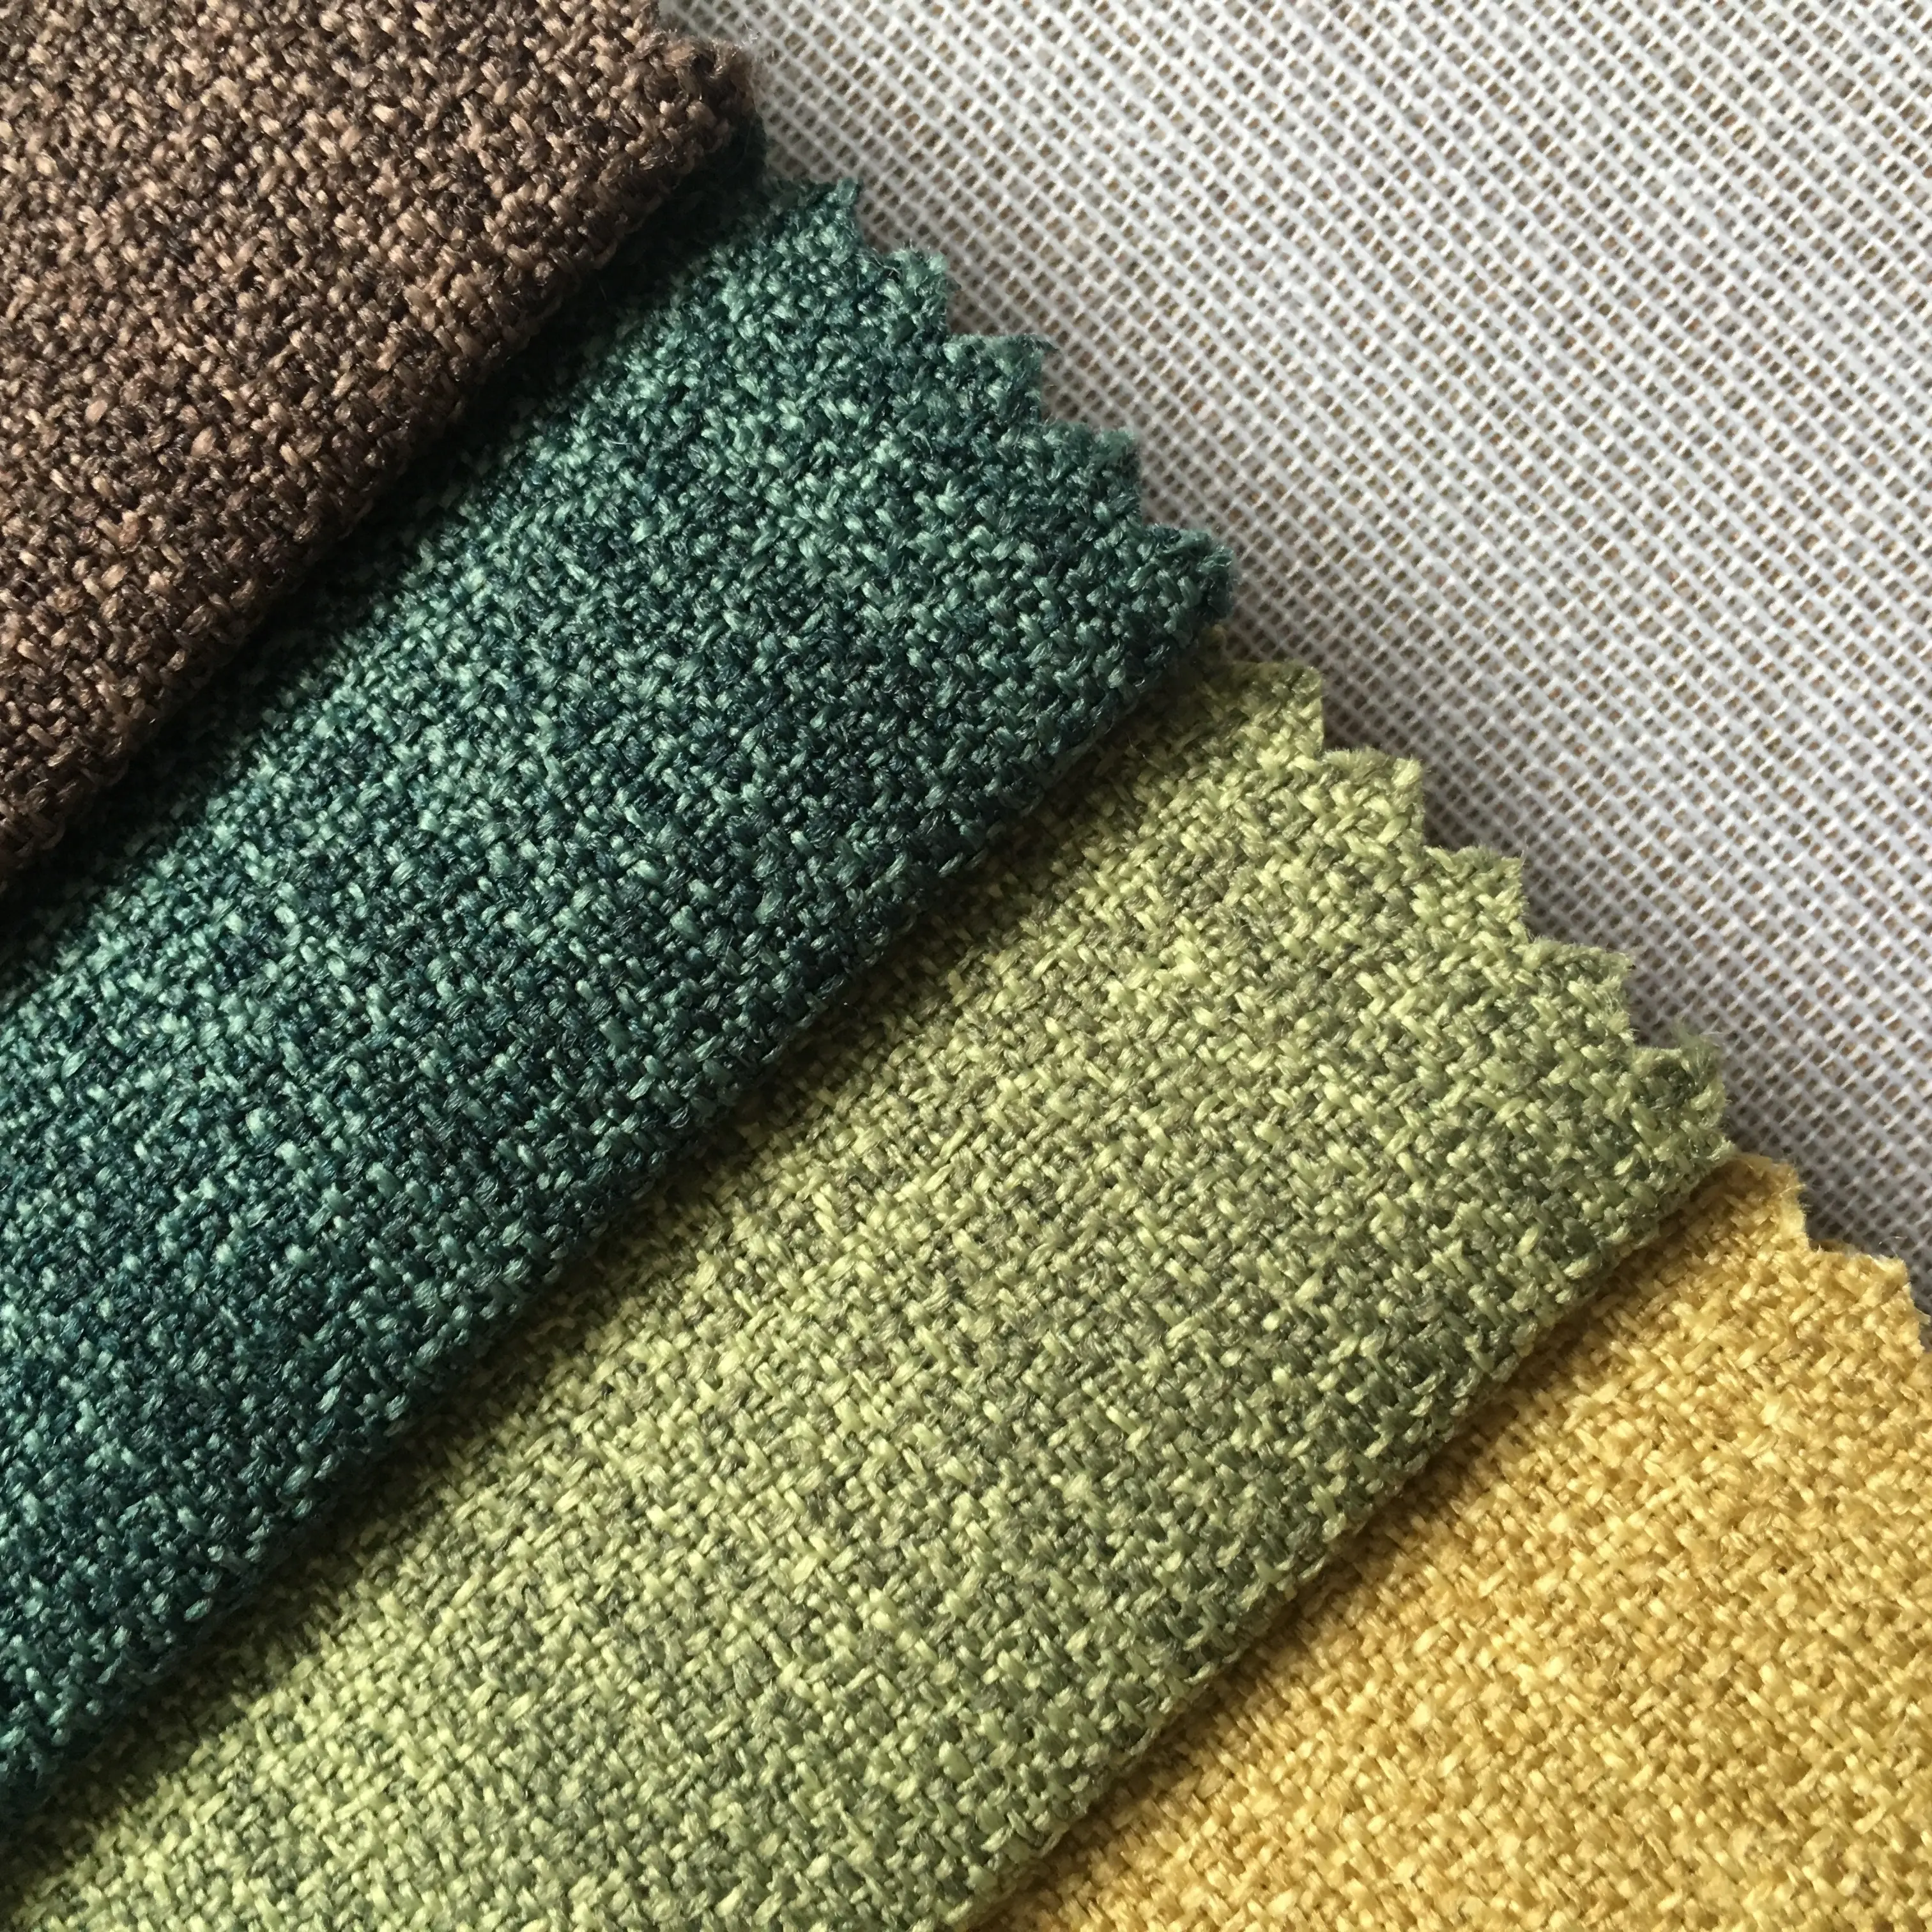 Möbels toff für den Großhandel Textil polsters ofa 100% Polyester Dobby Einfarbiges Sofa Textil Leinen Look s Stoff